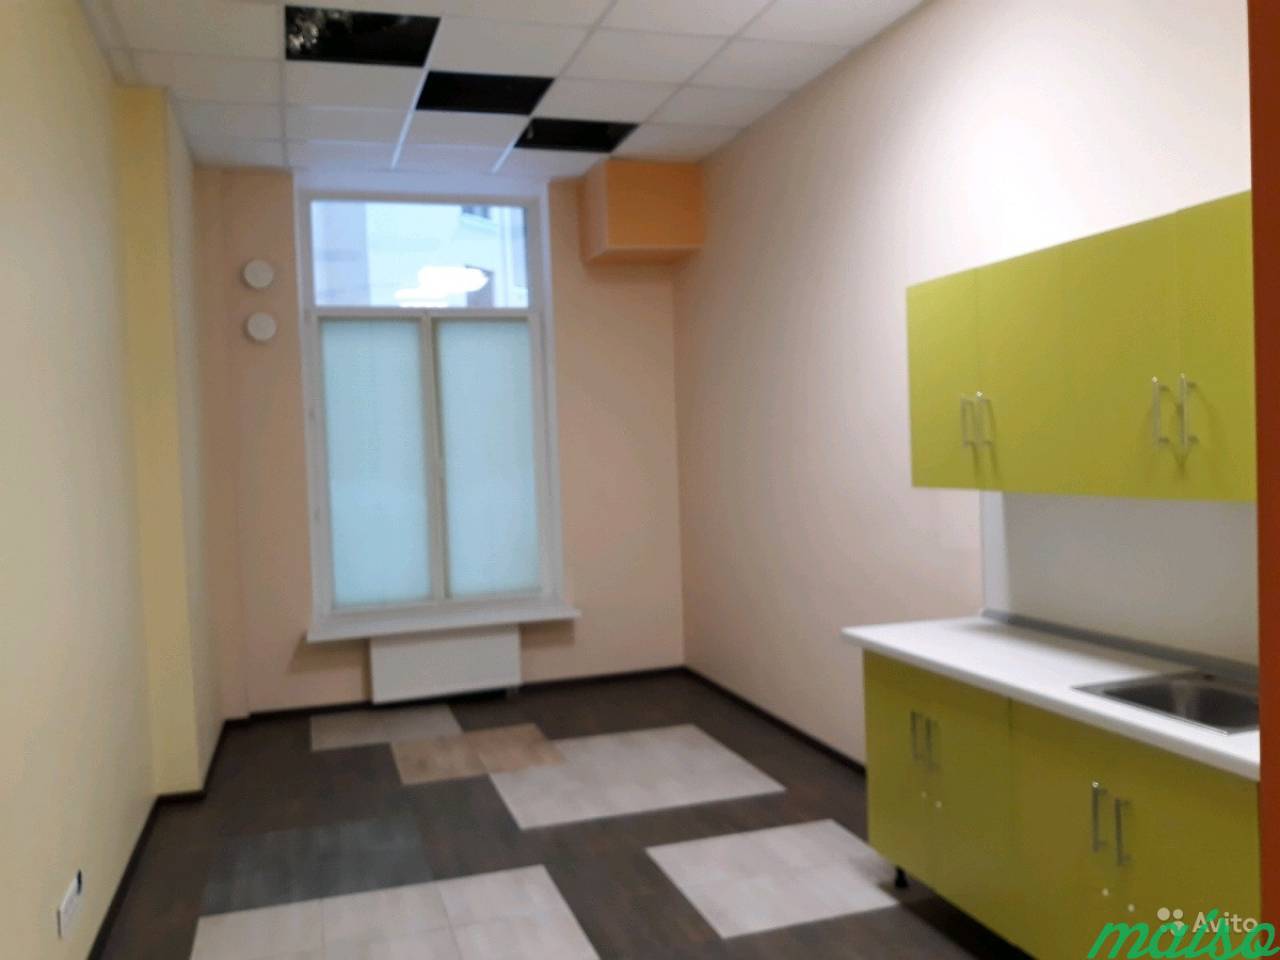 Медицинская клиника. Салон 270 кв.м в Санкт-Петербурге. Фото 13